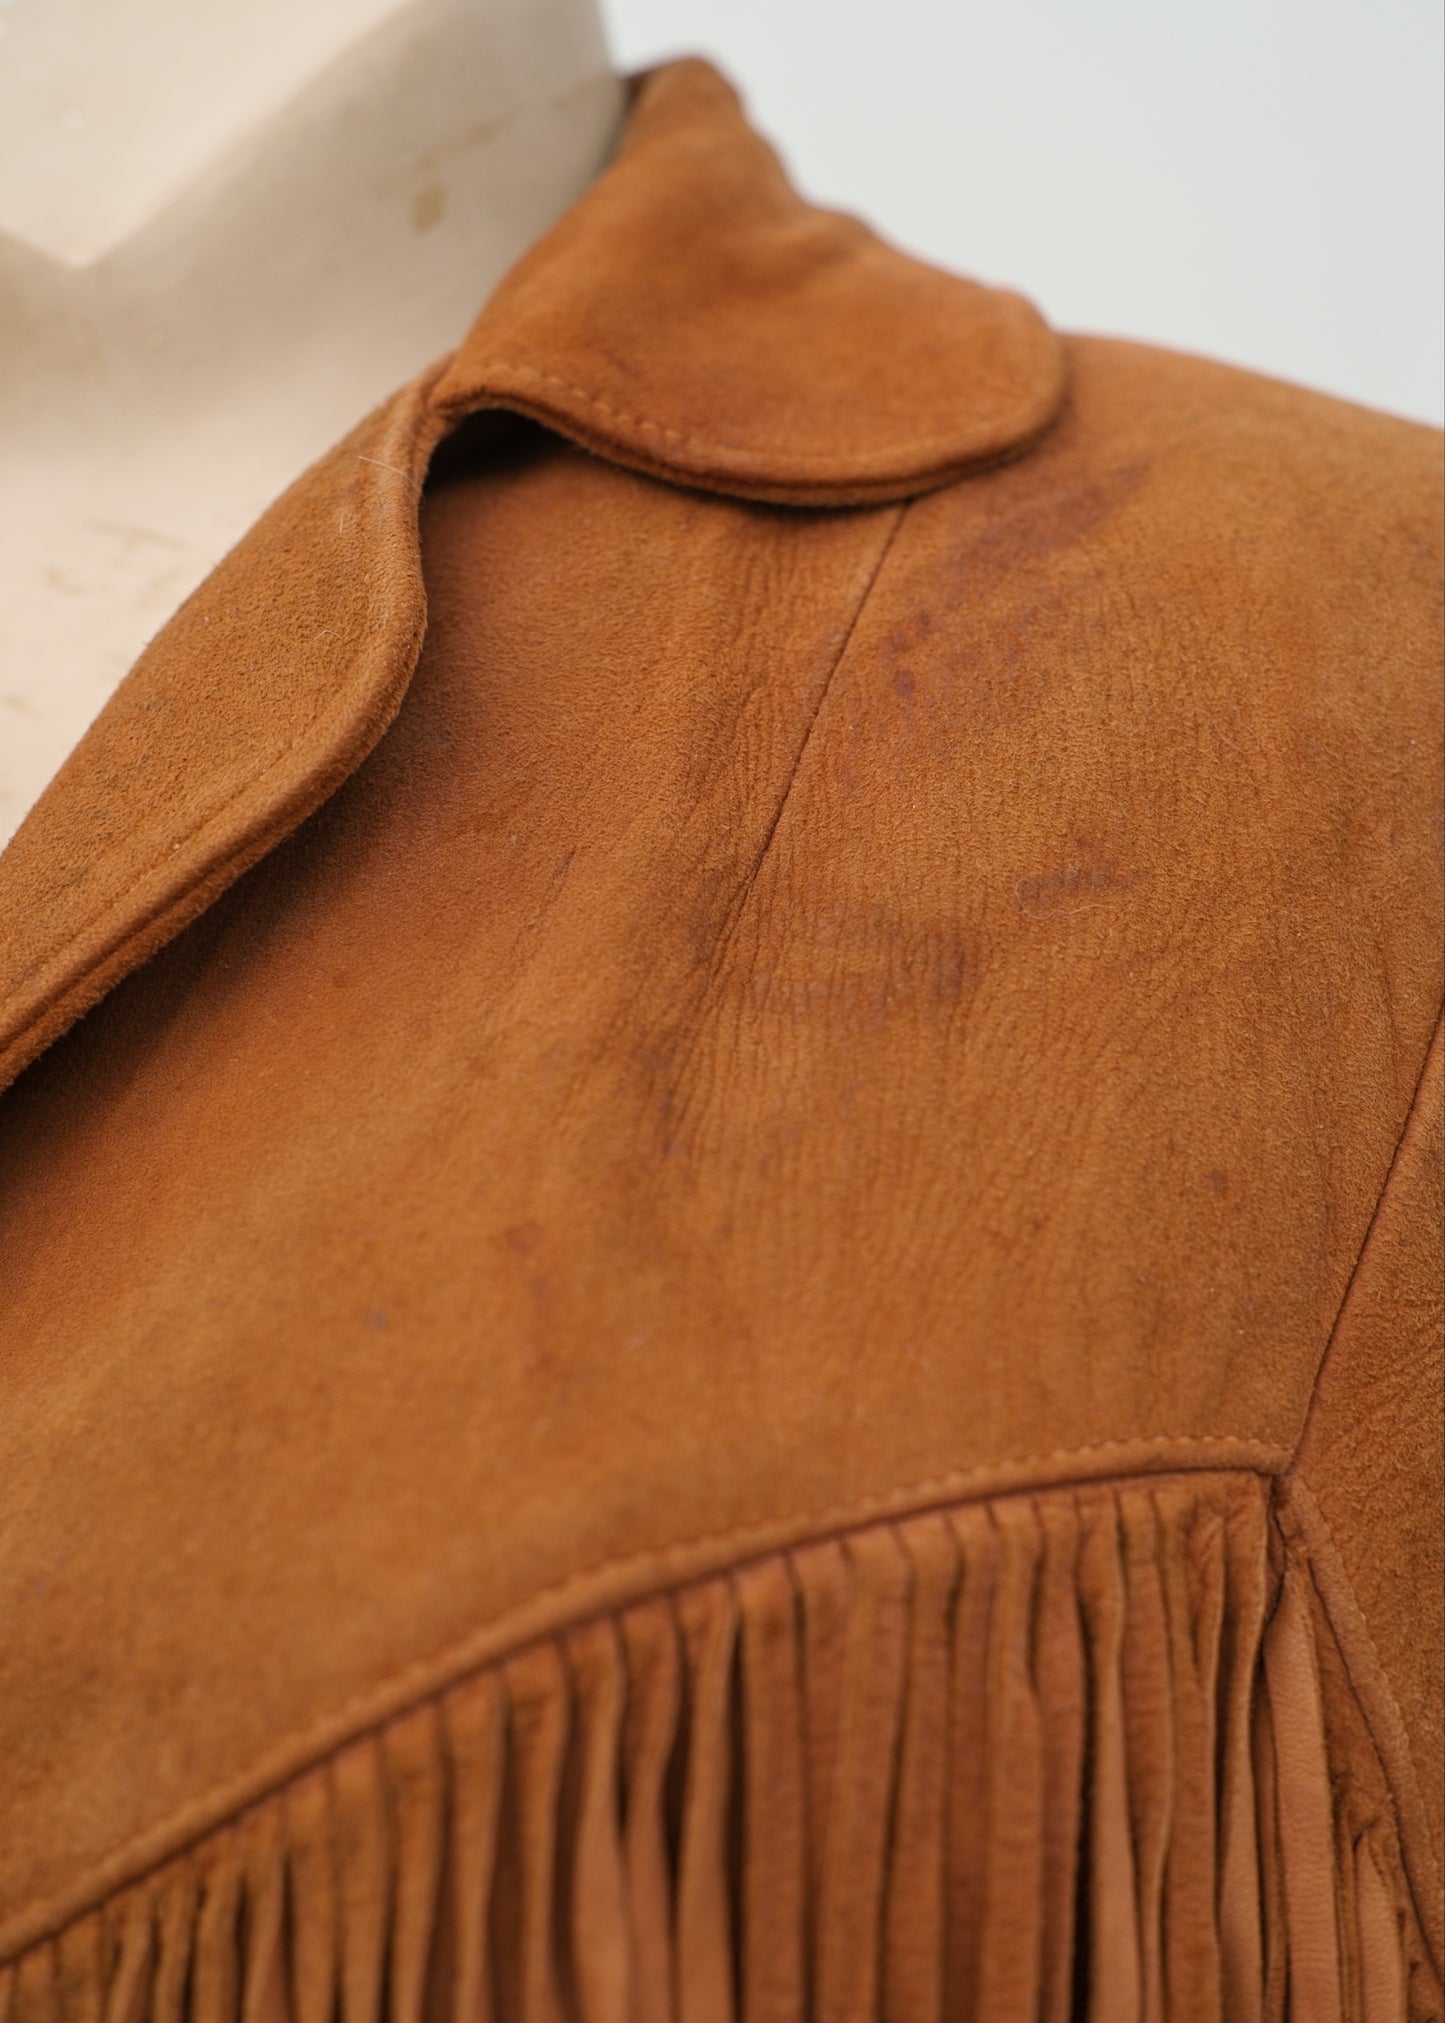 Vintage Western Buckskin Suede Fringed Jacket • Canadian